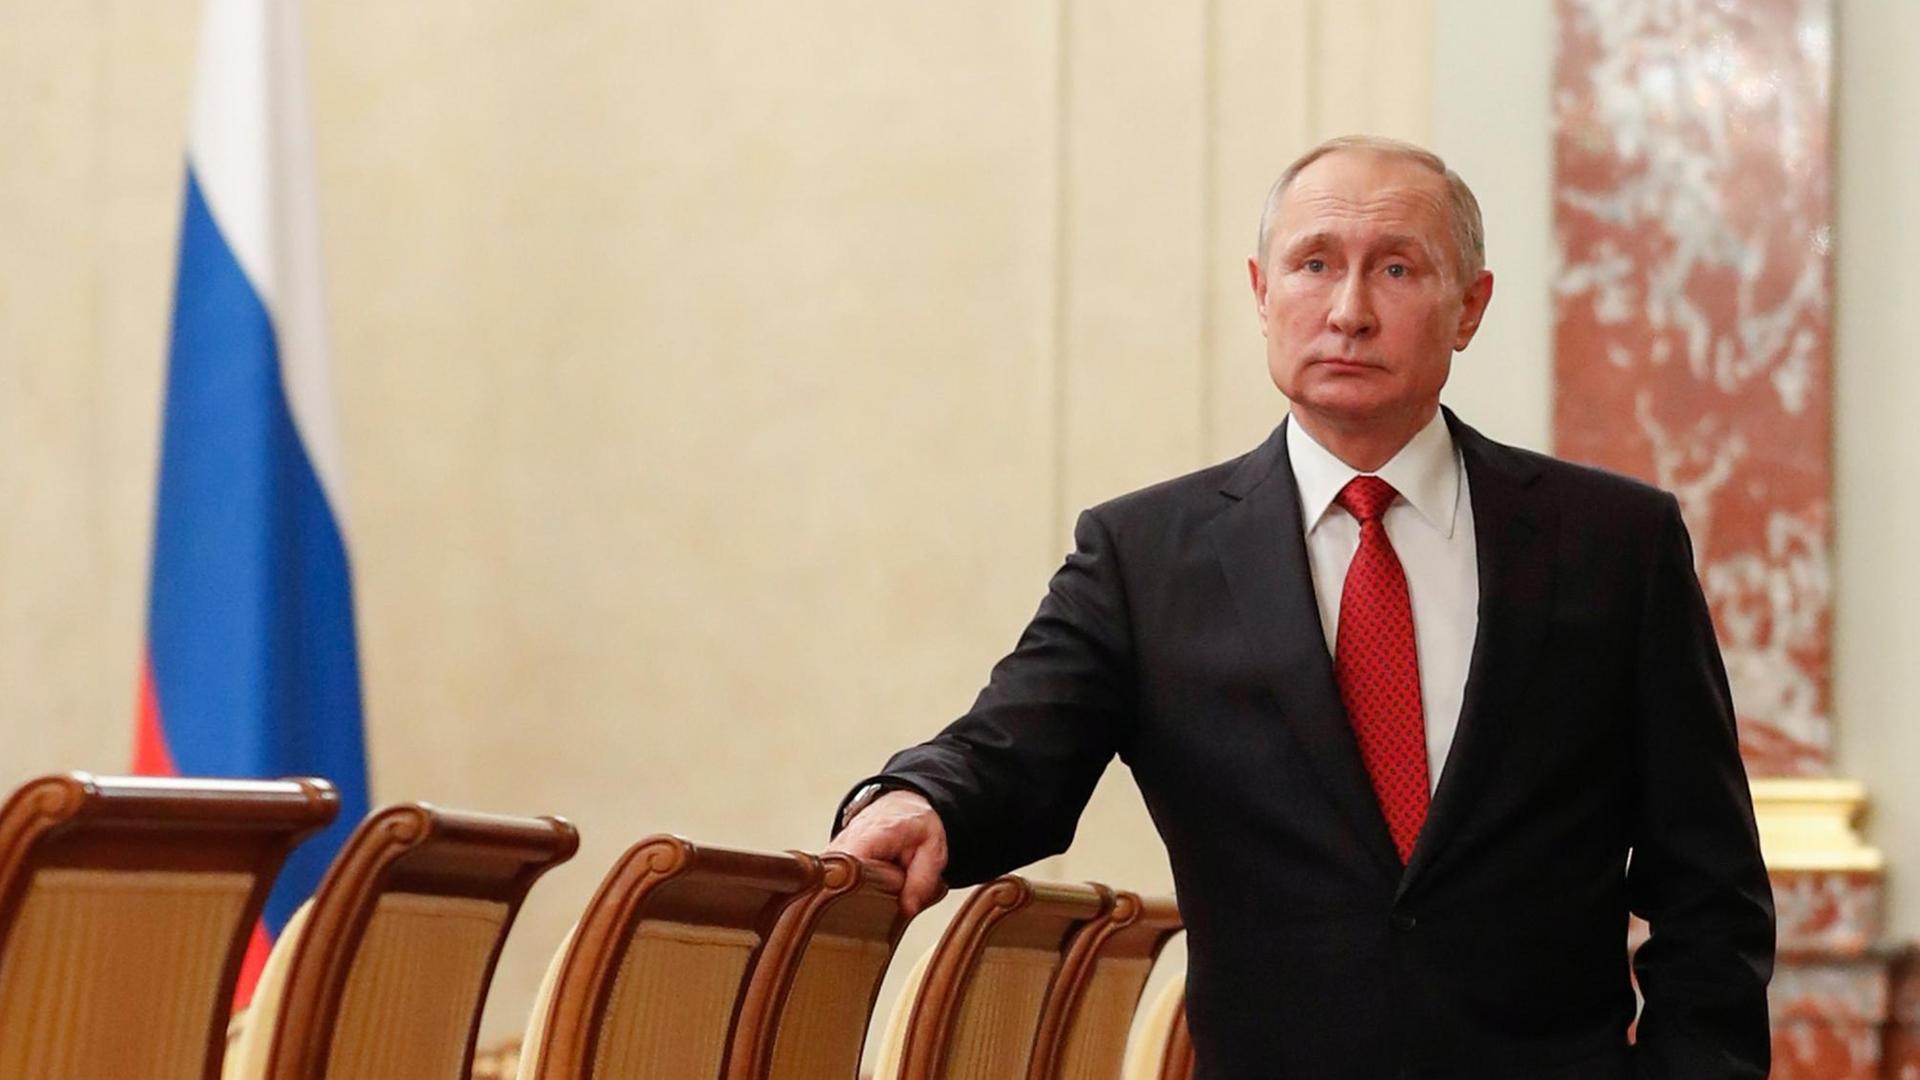 Russlands Präsident Wladimir Putin steht an einen Stuhl gelehnt im Kabinettsaal im Kremel.